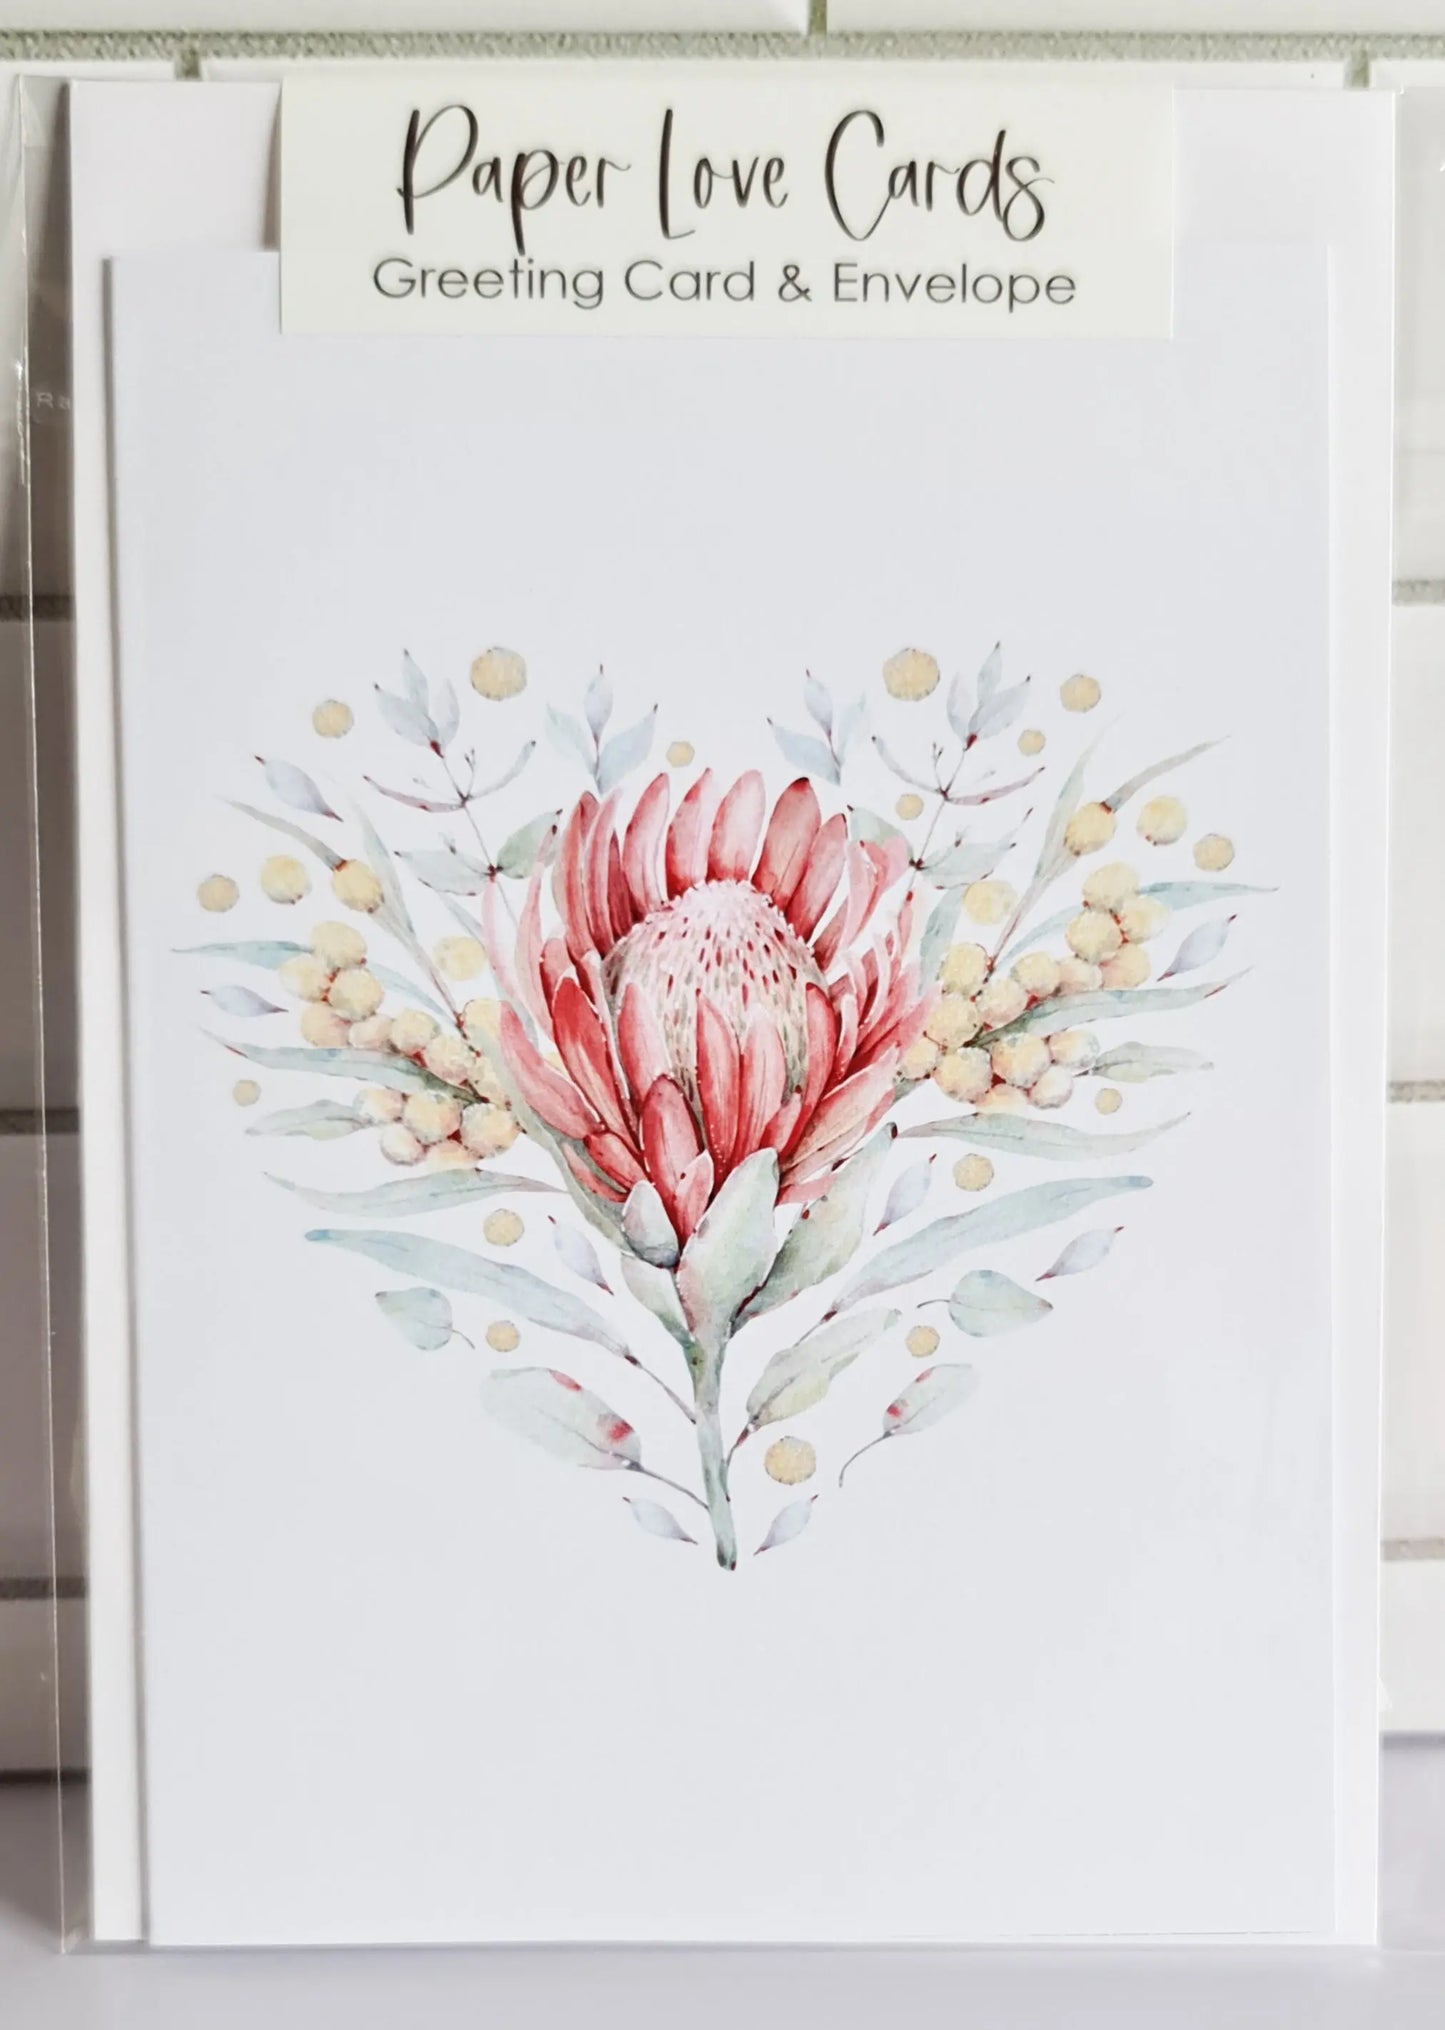 Australiana Cards - Waratah & Kookaburra Paper Love Cards